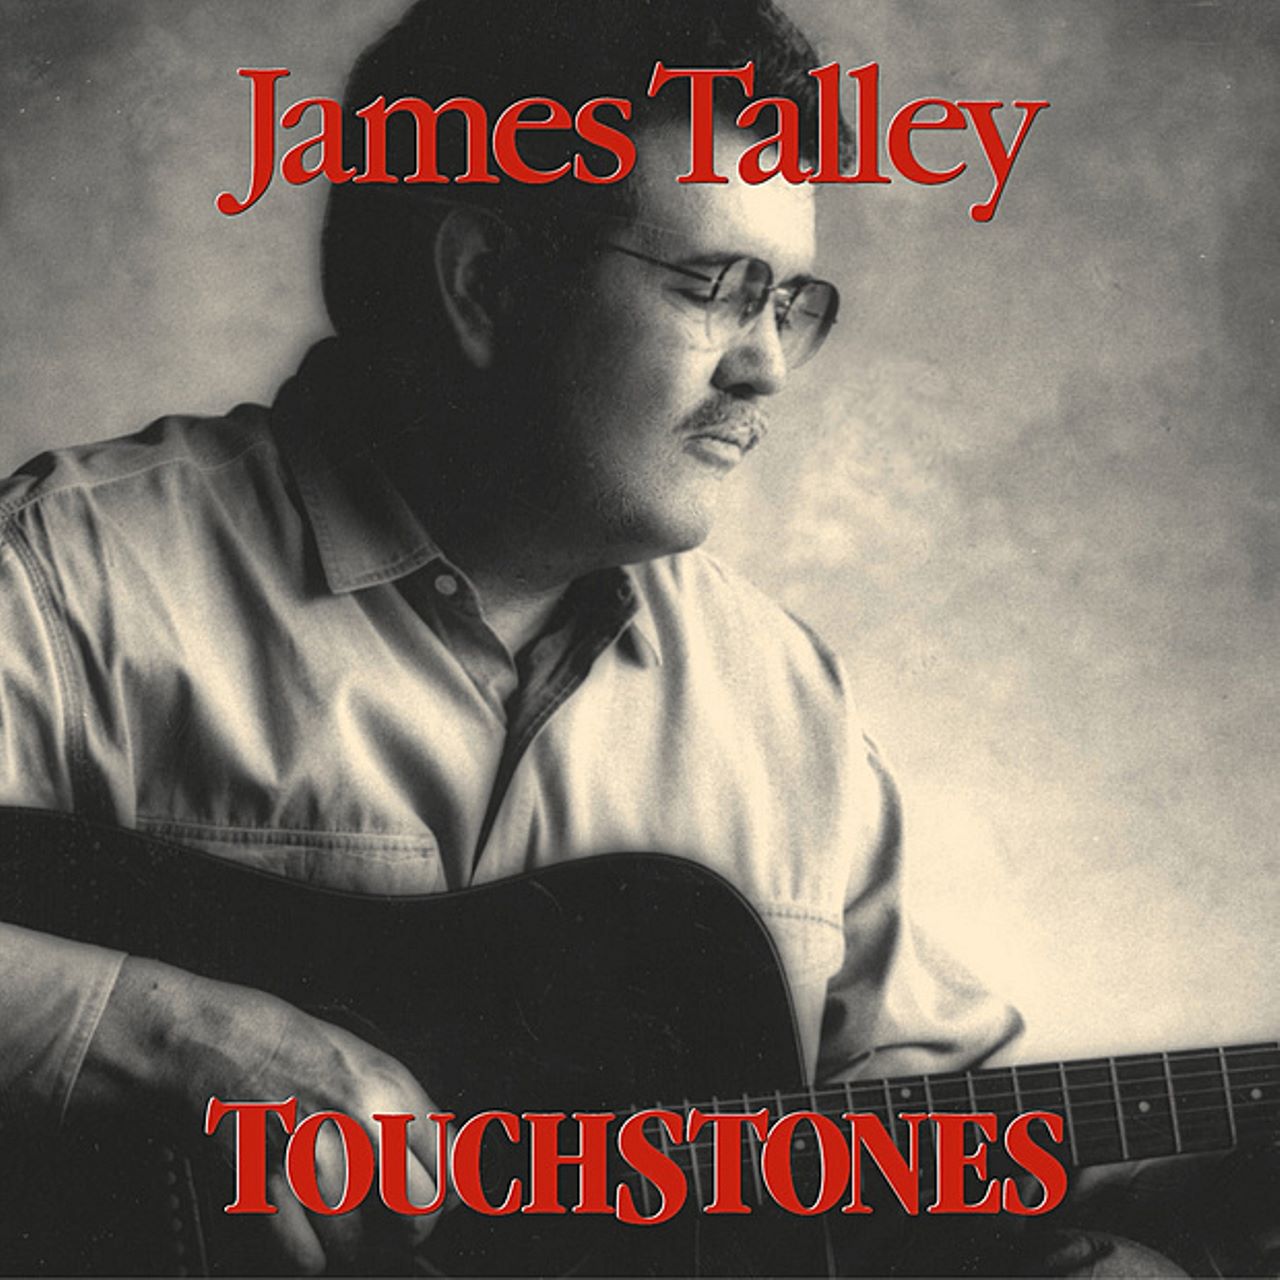 James Talley - Touchstones cover album